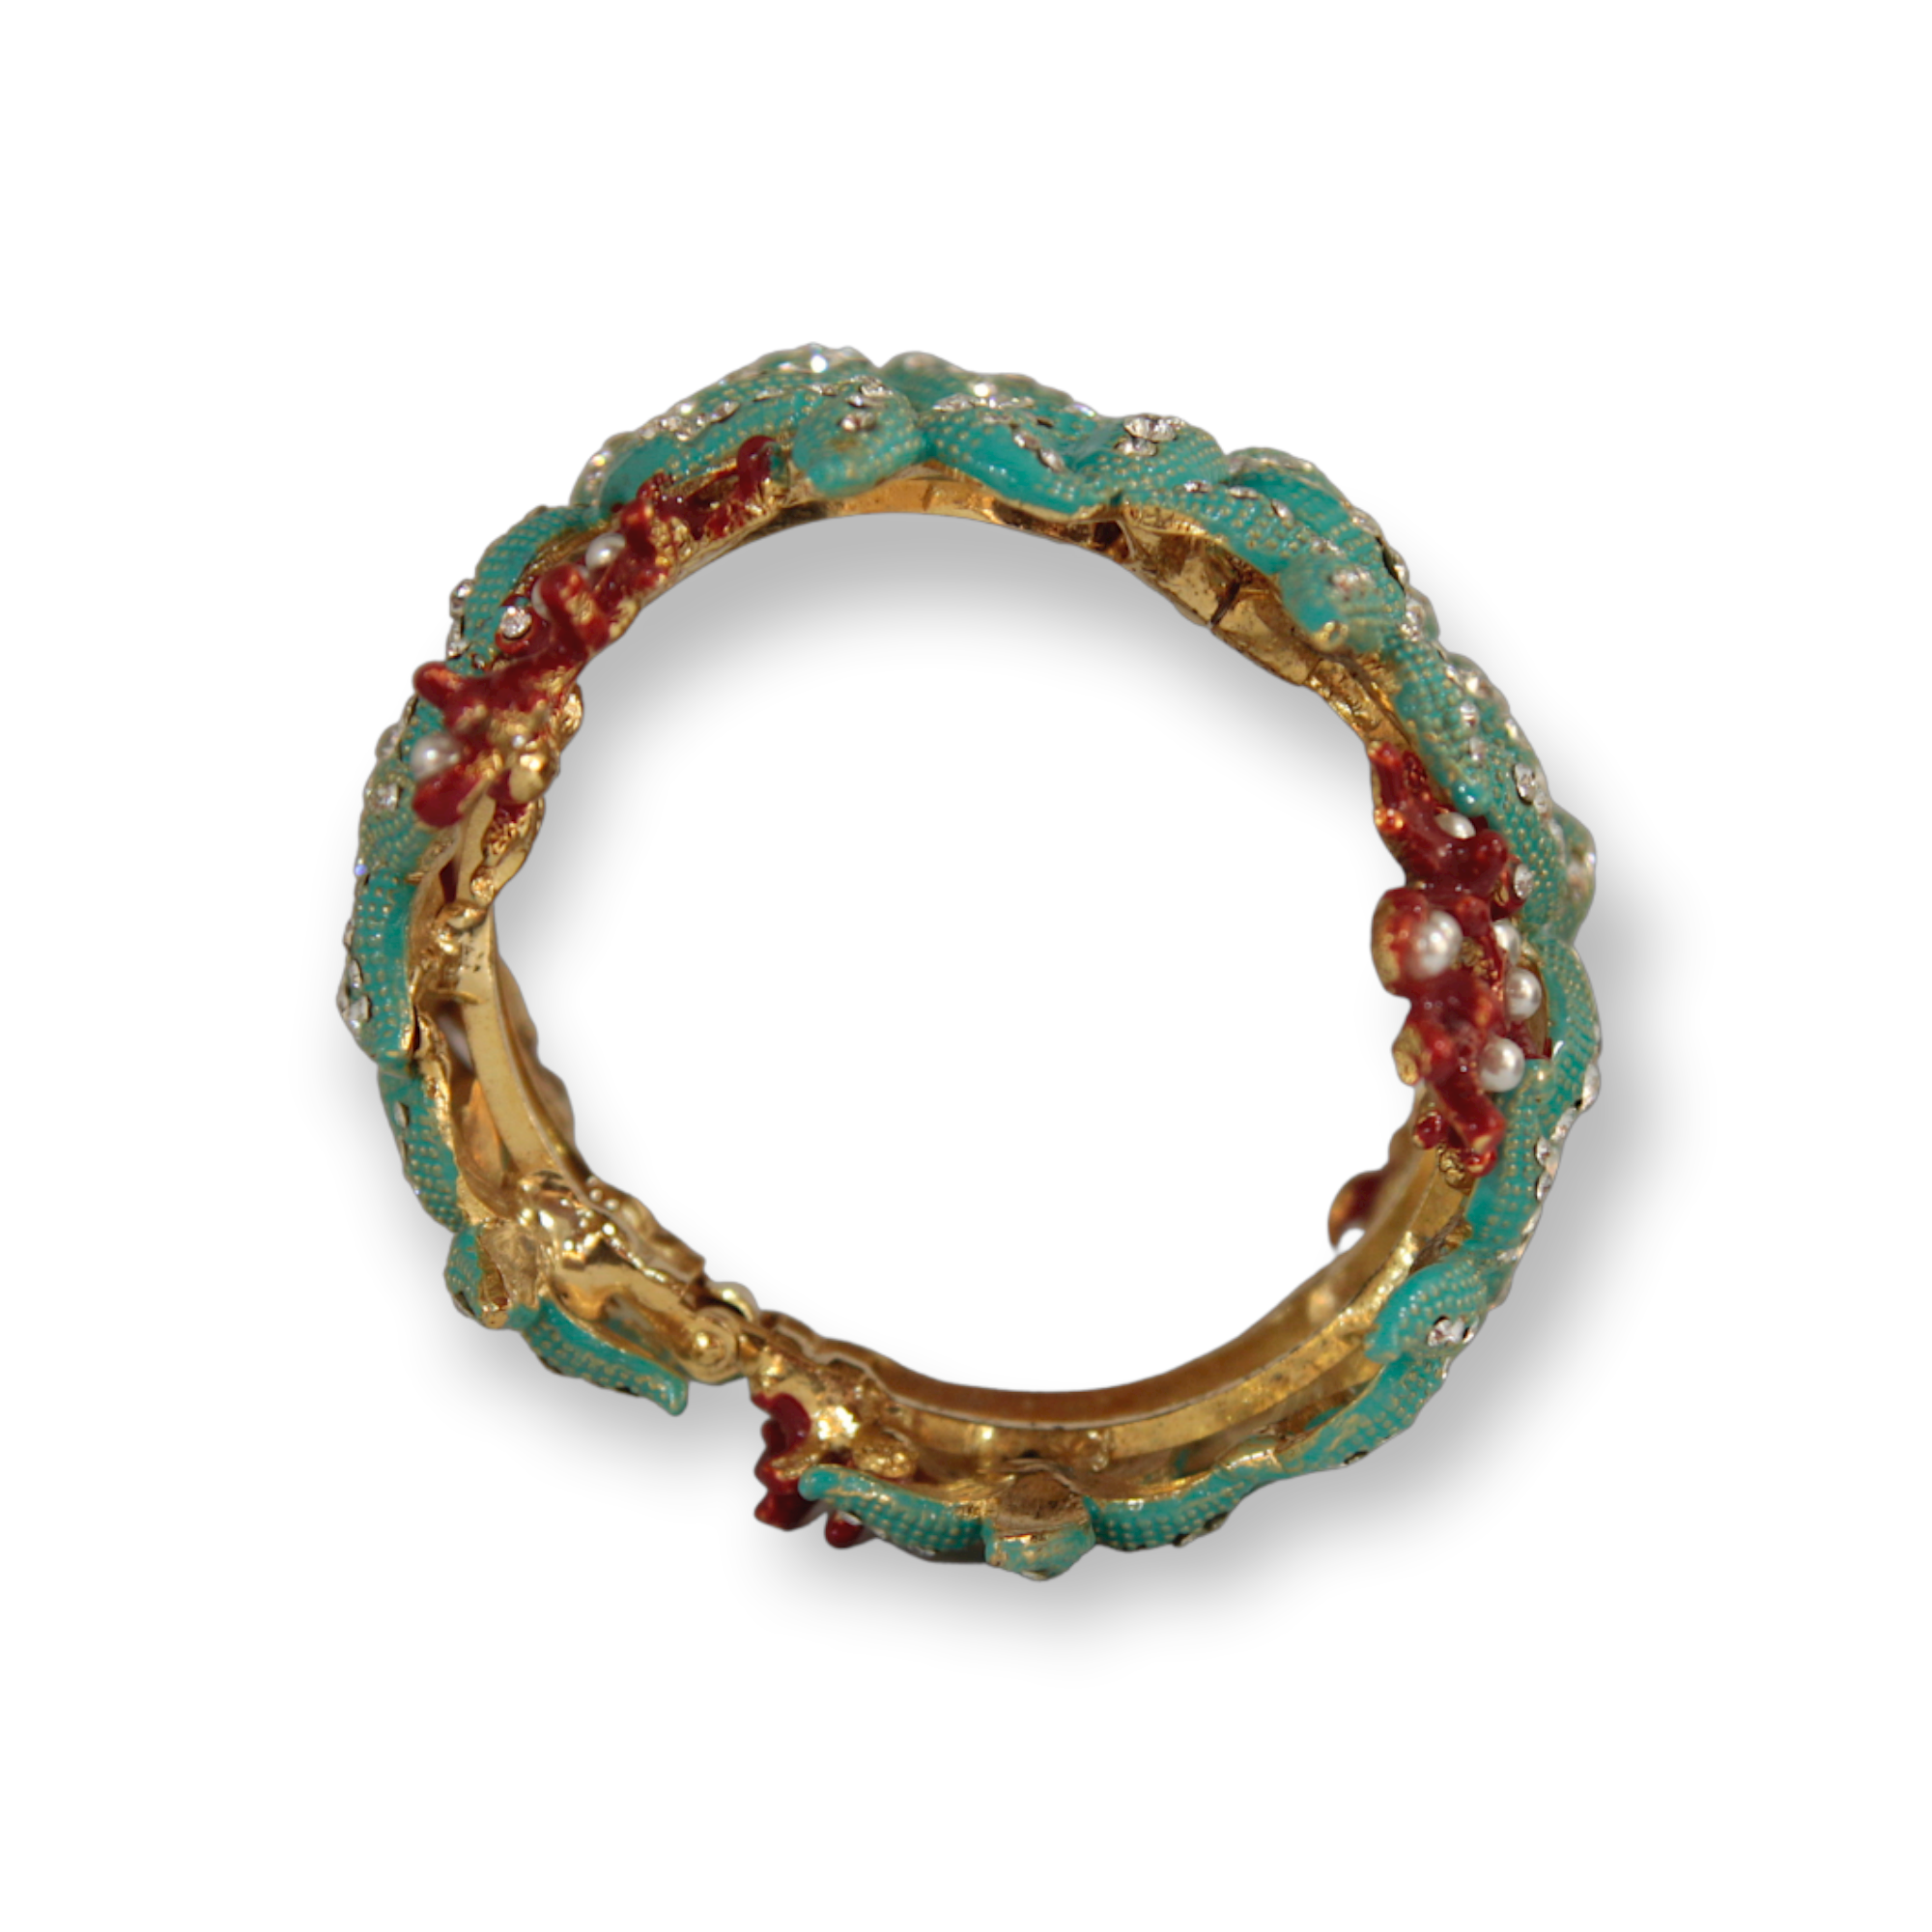 Bracelet with a sea stars theme